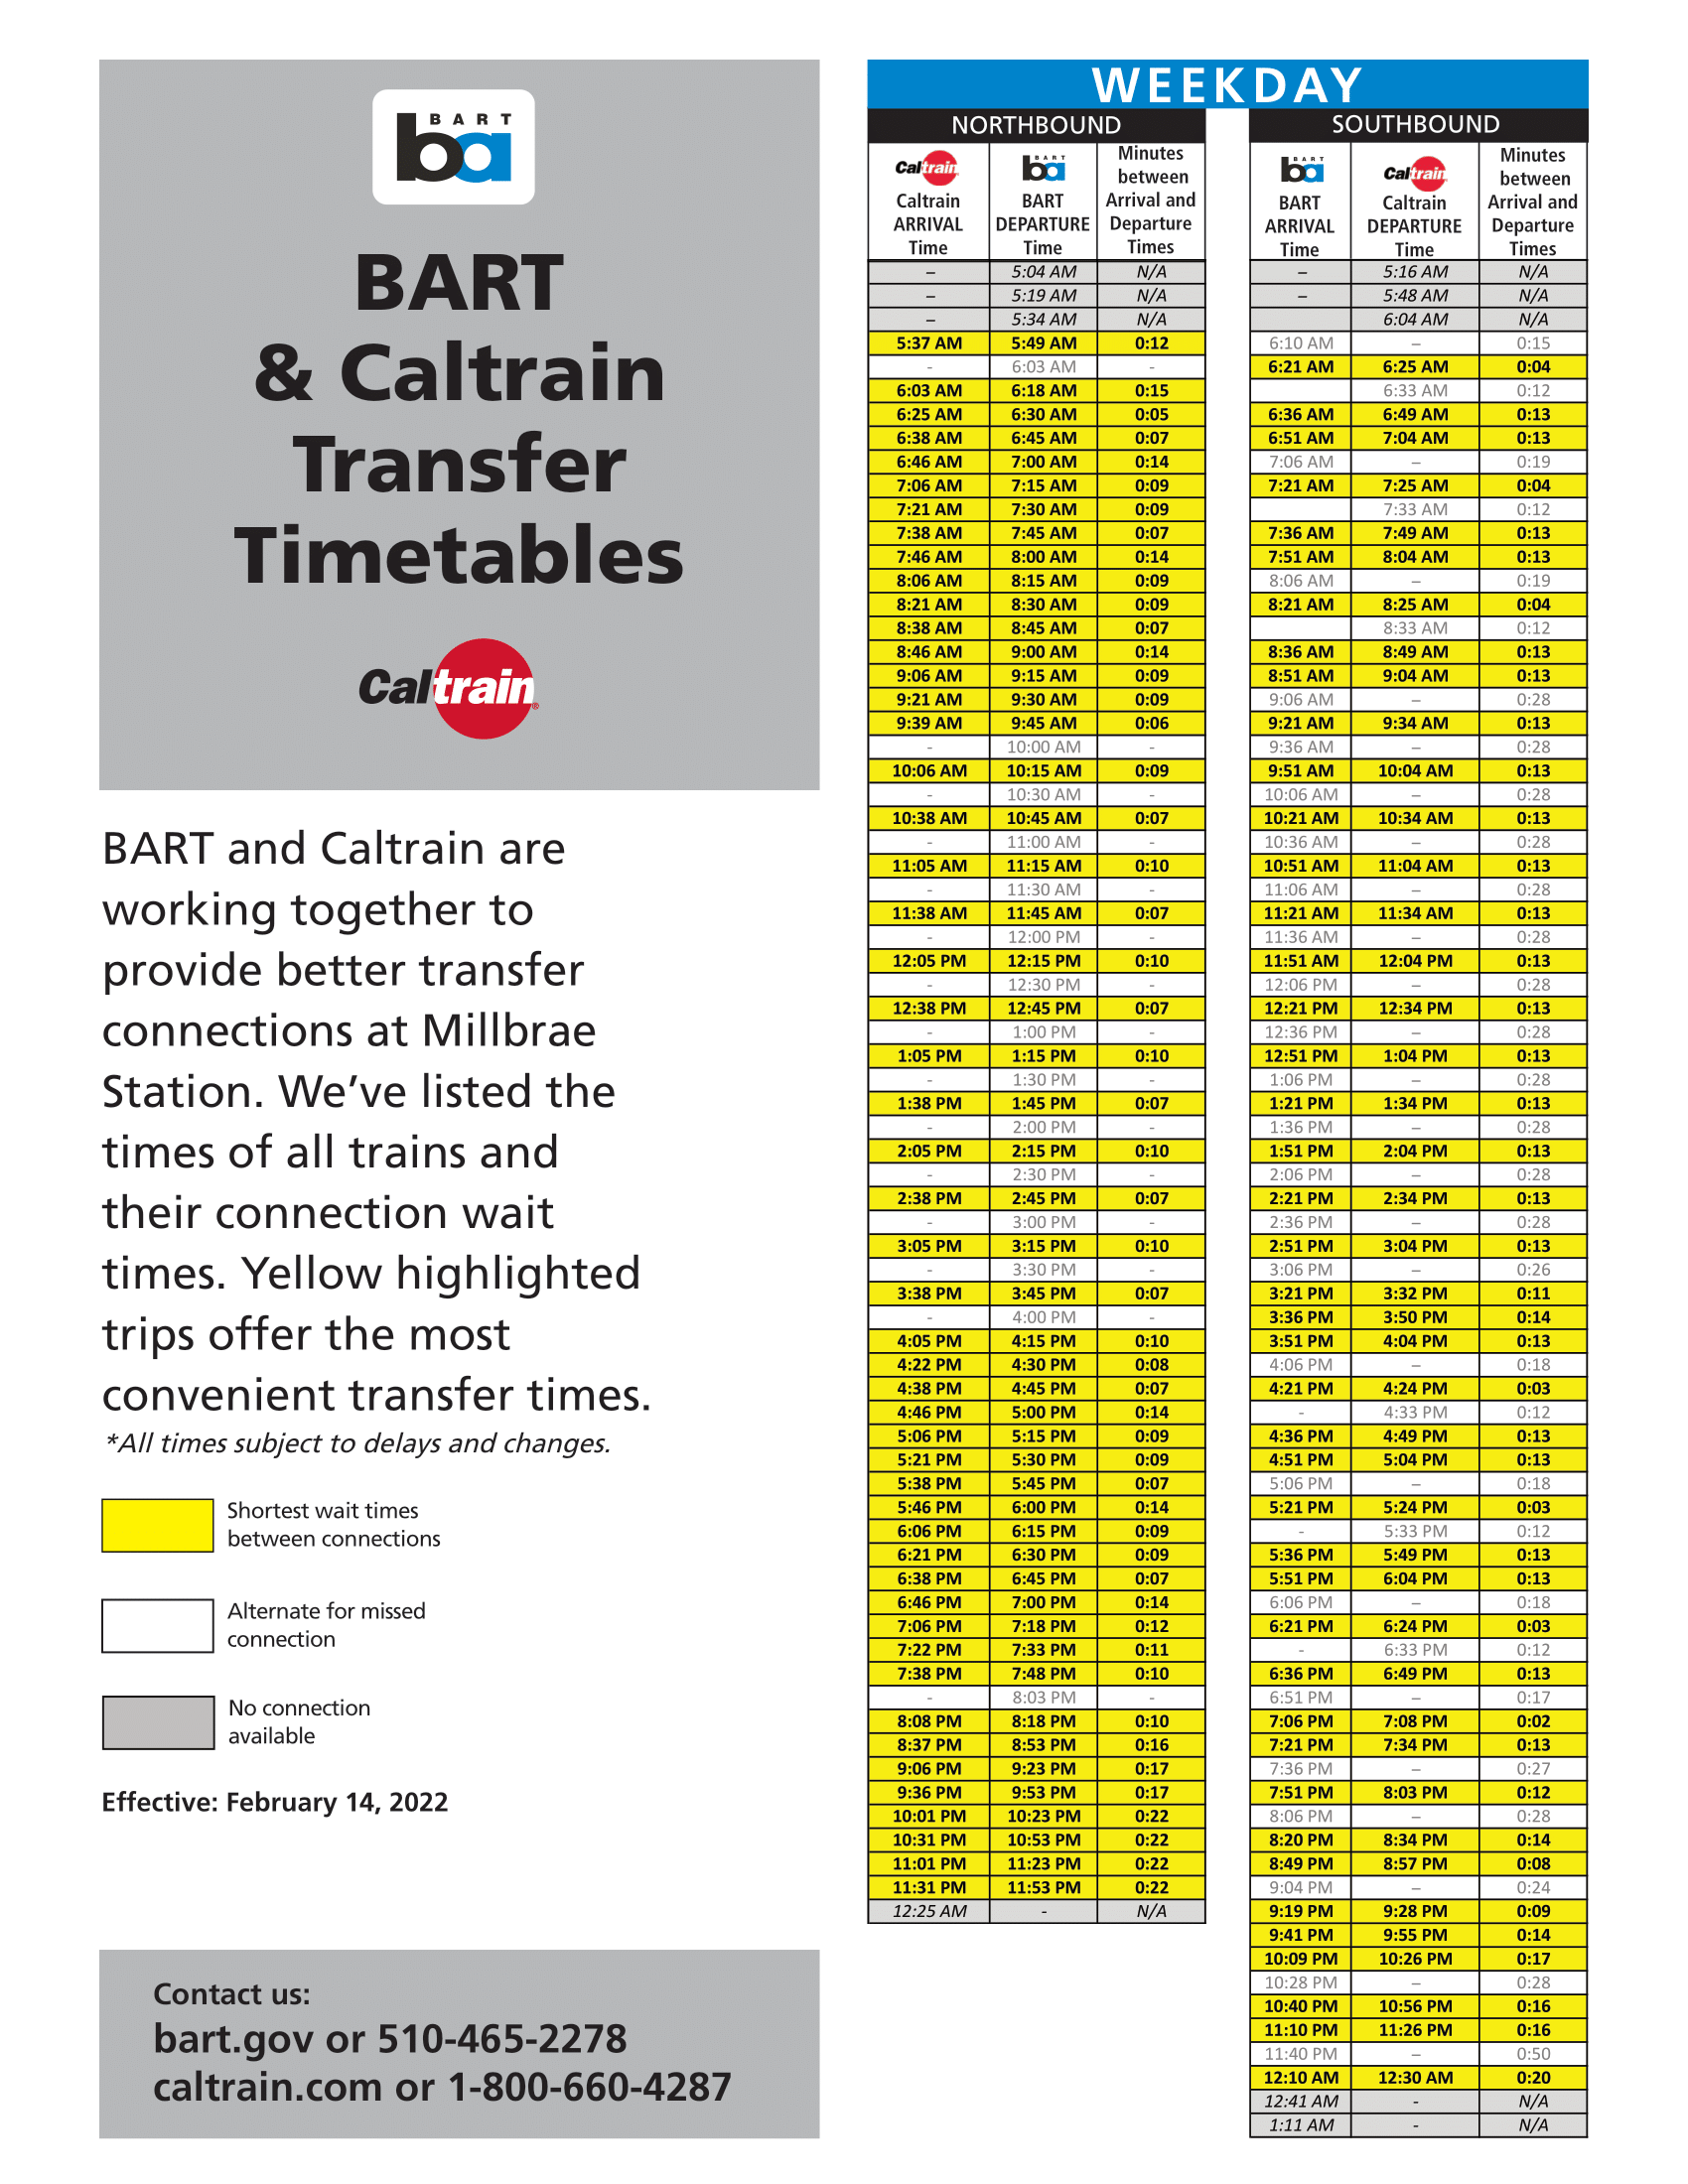 BART-Caltrain Millbrae Transfer Feb 14, 2022 Weekday